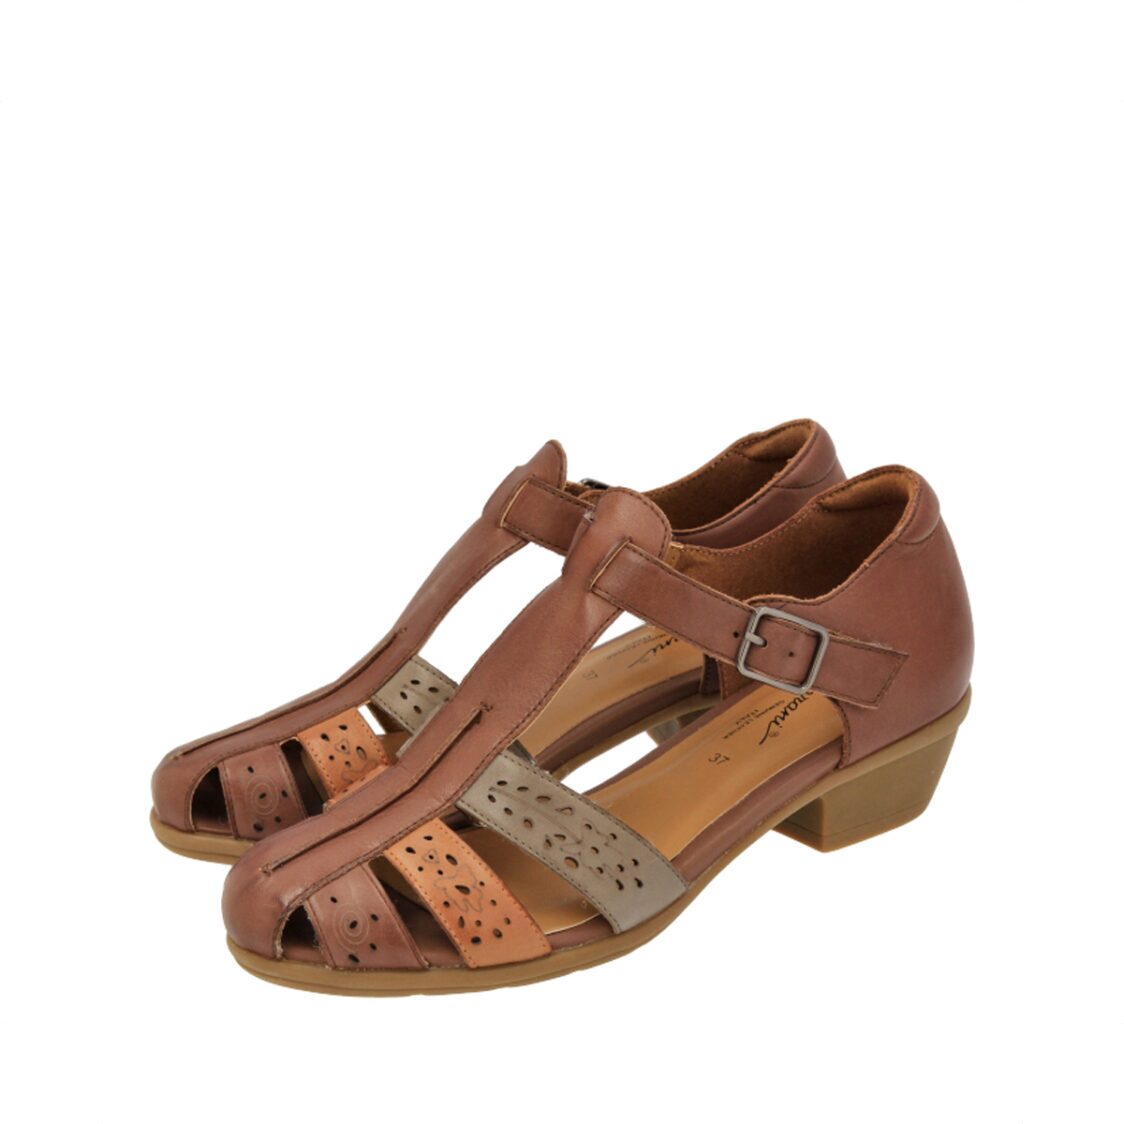 Barani 19606 Brown Leather Heeled Sandals Short